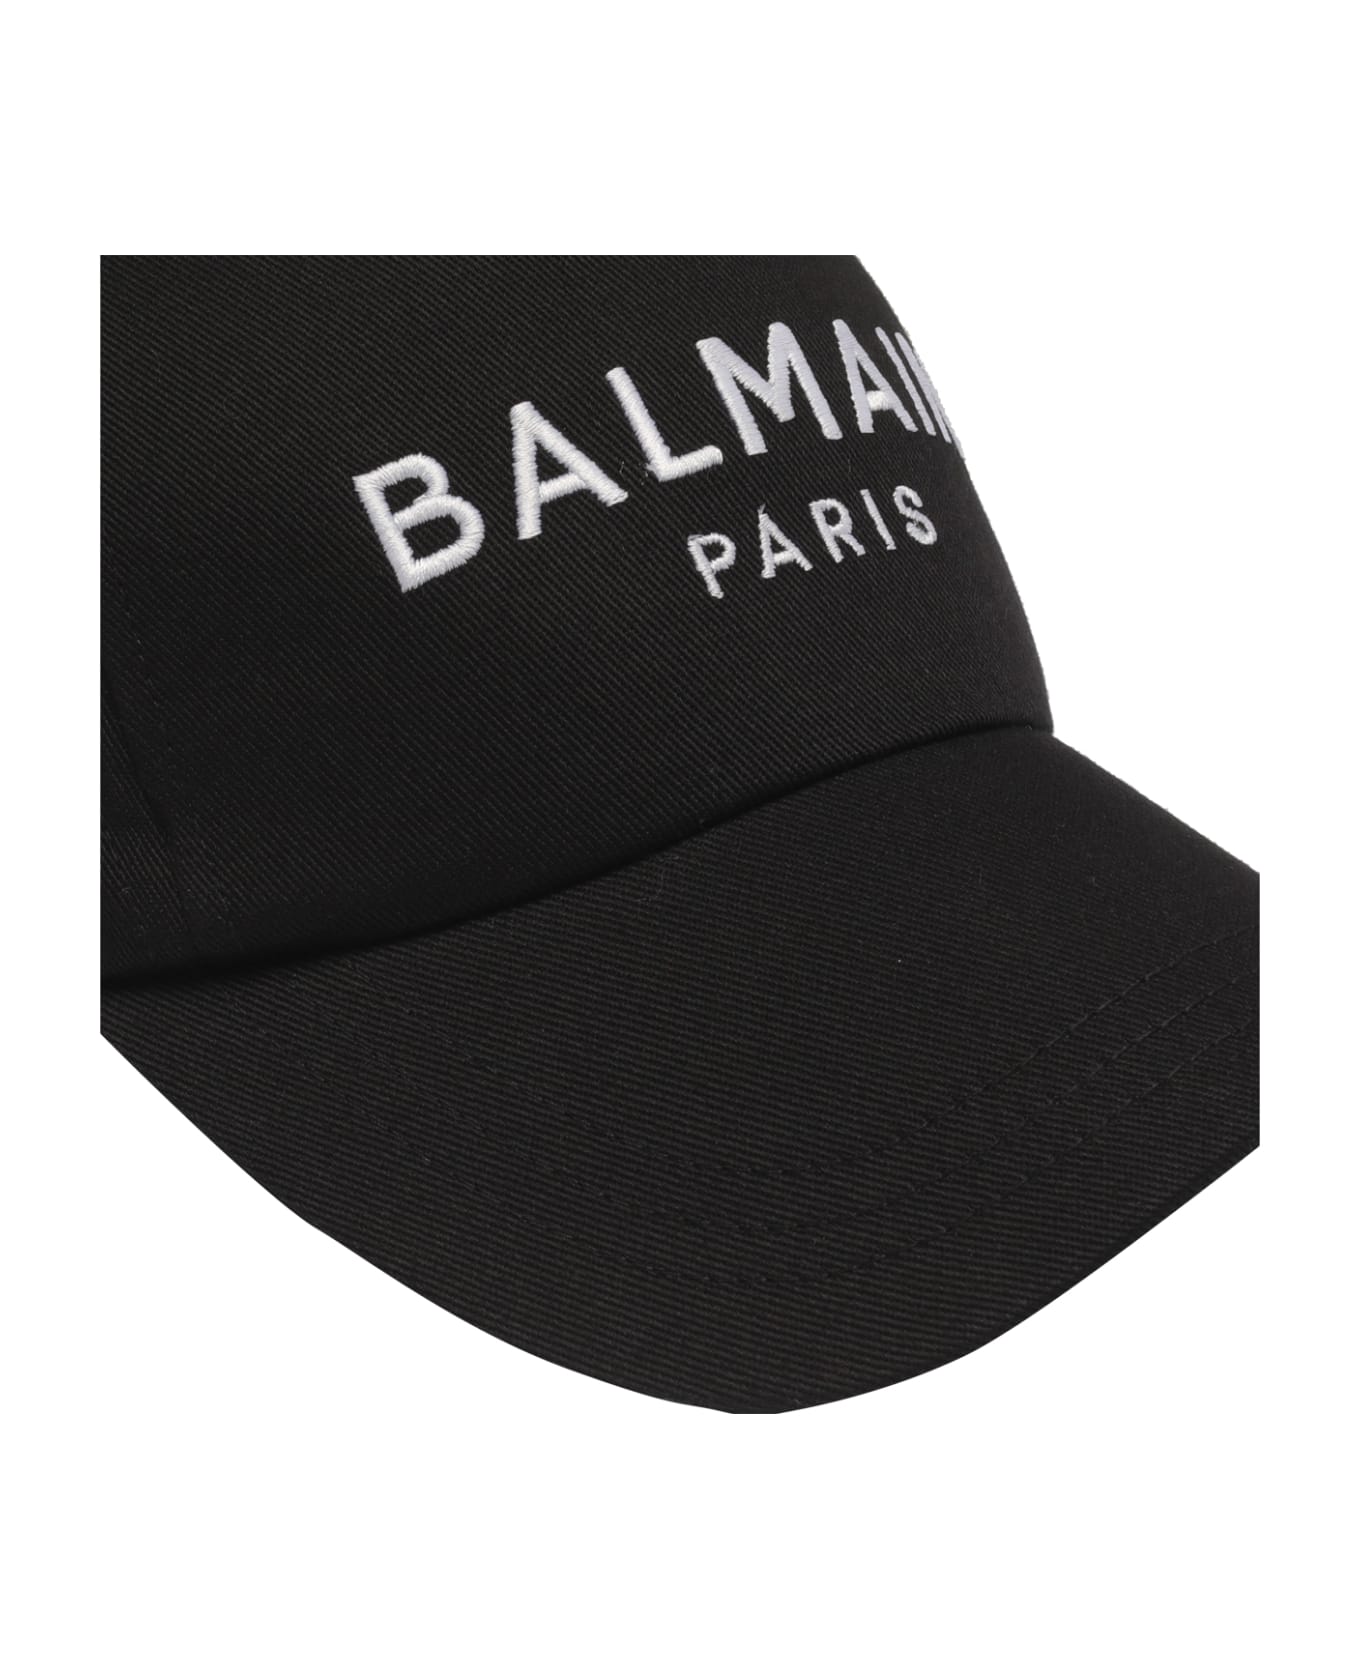 Balmain Baseball Hat With Logo - Black 帽子